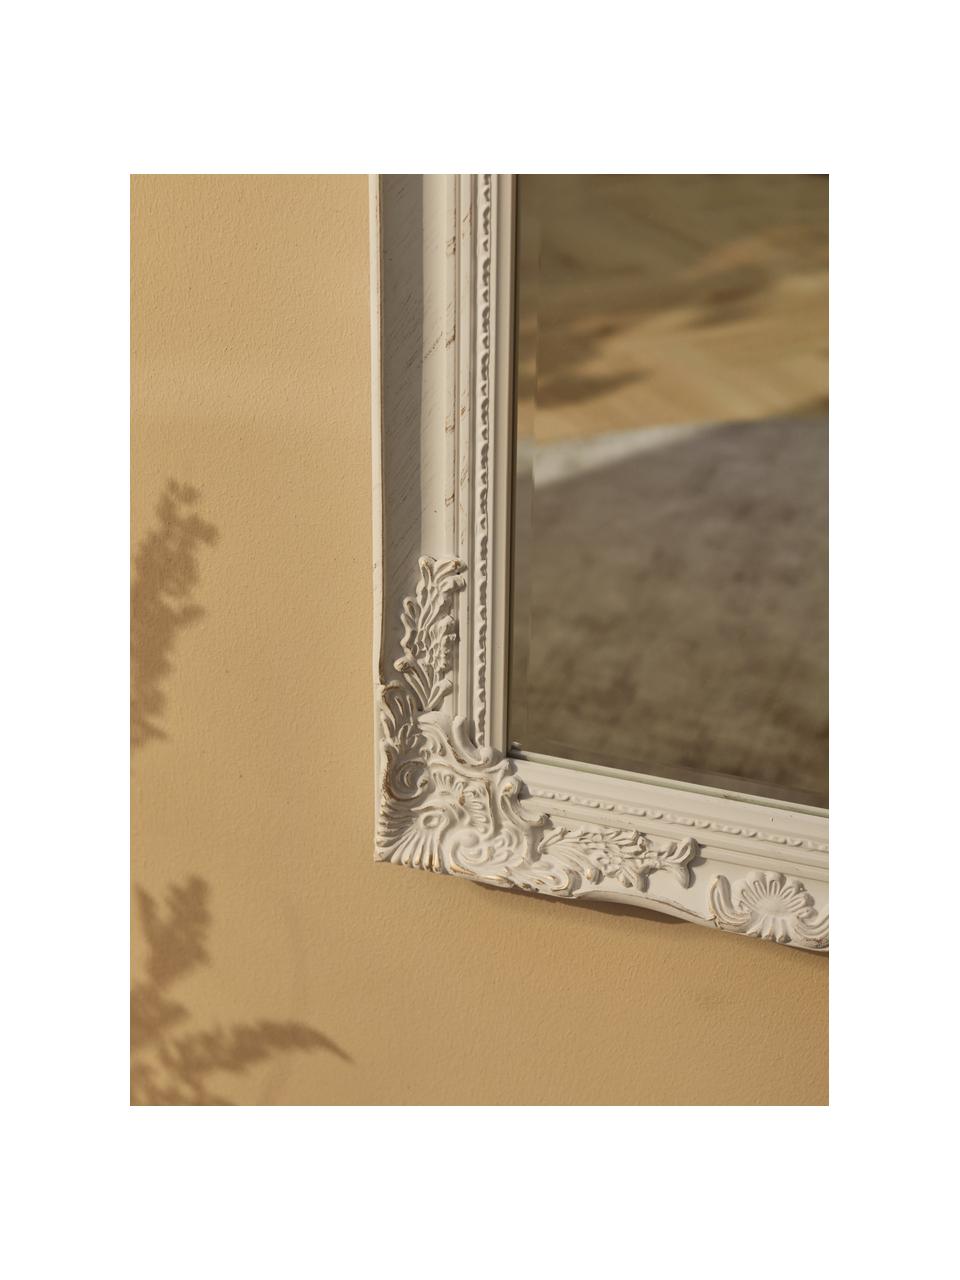 Espejo de pared de madera Miro, Espejo: cristal, Blanco, An 42 x Al 132 cm